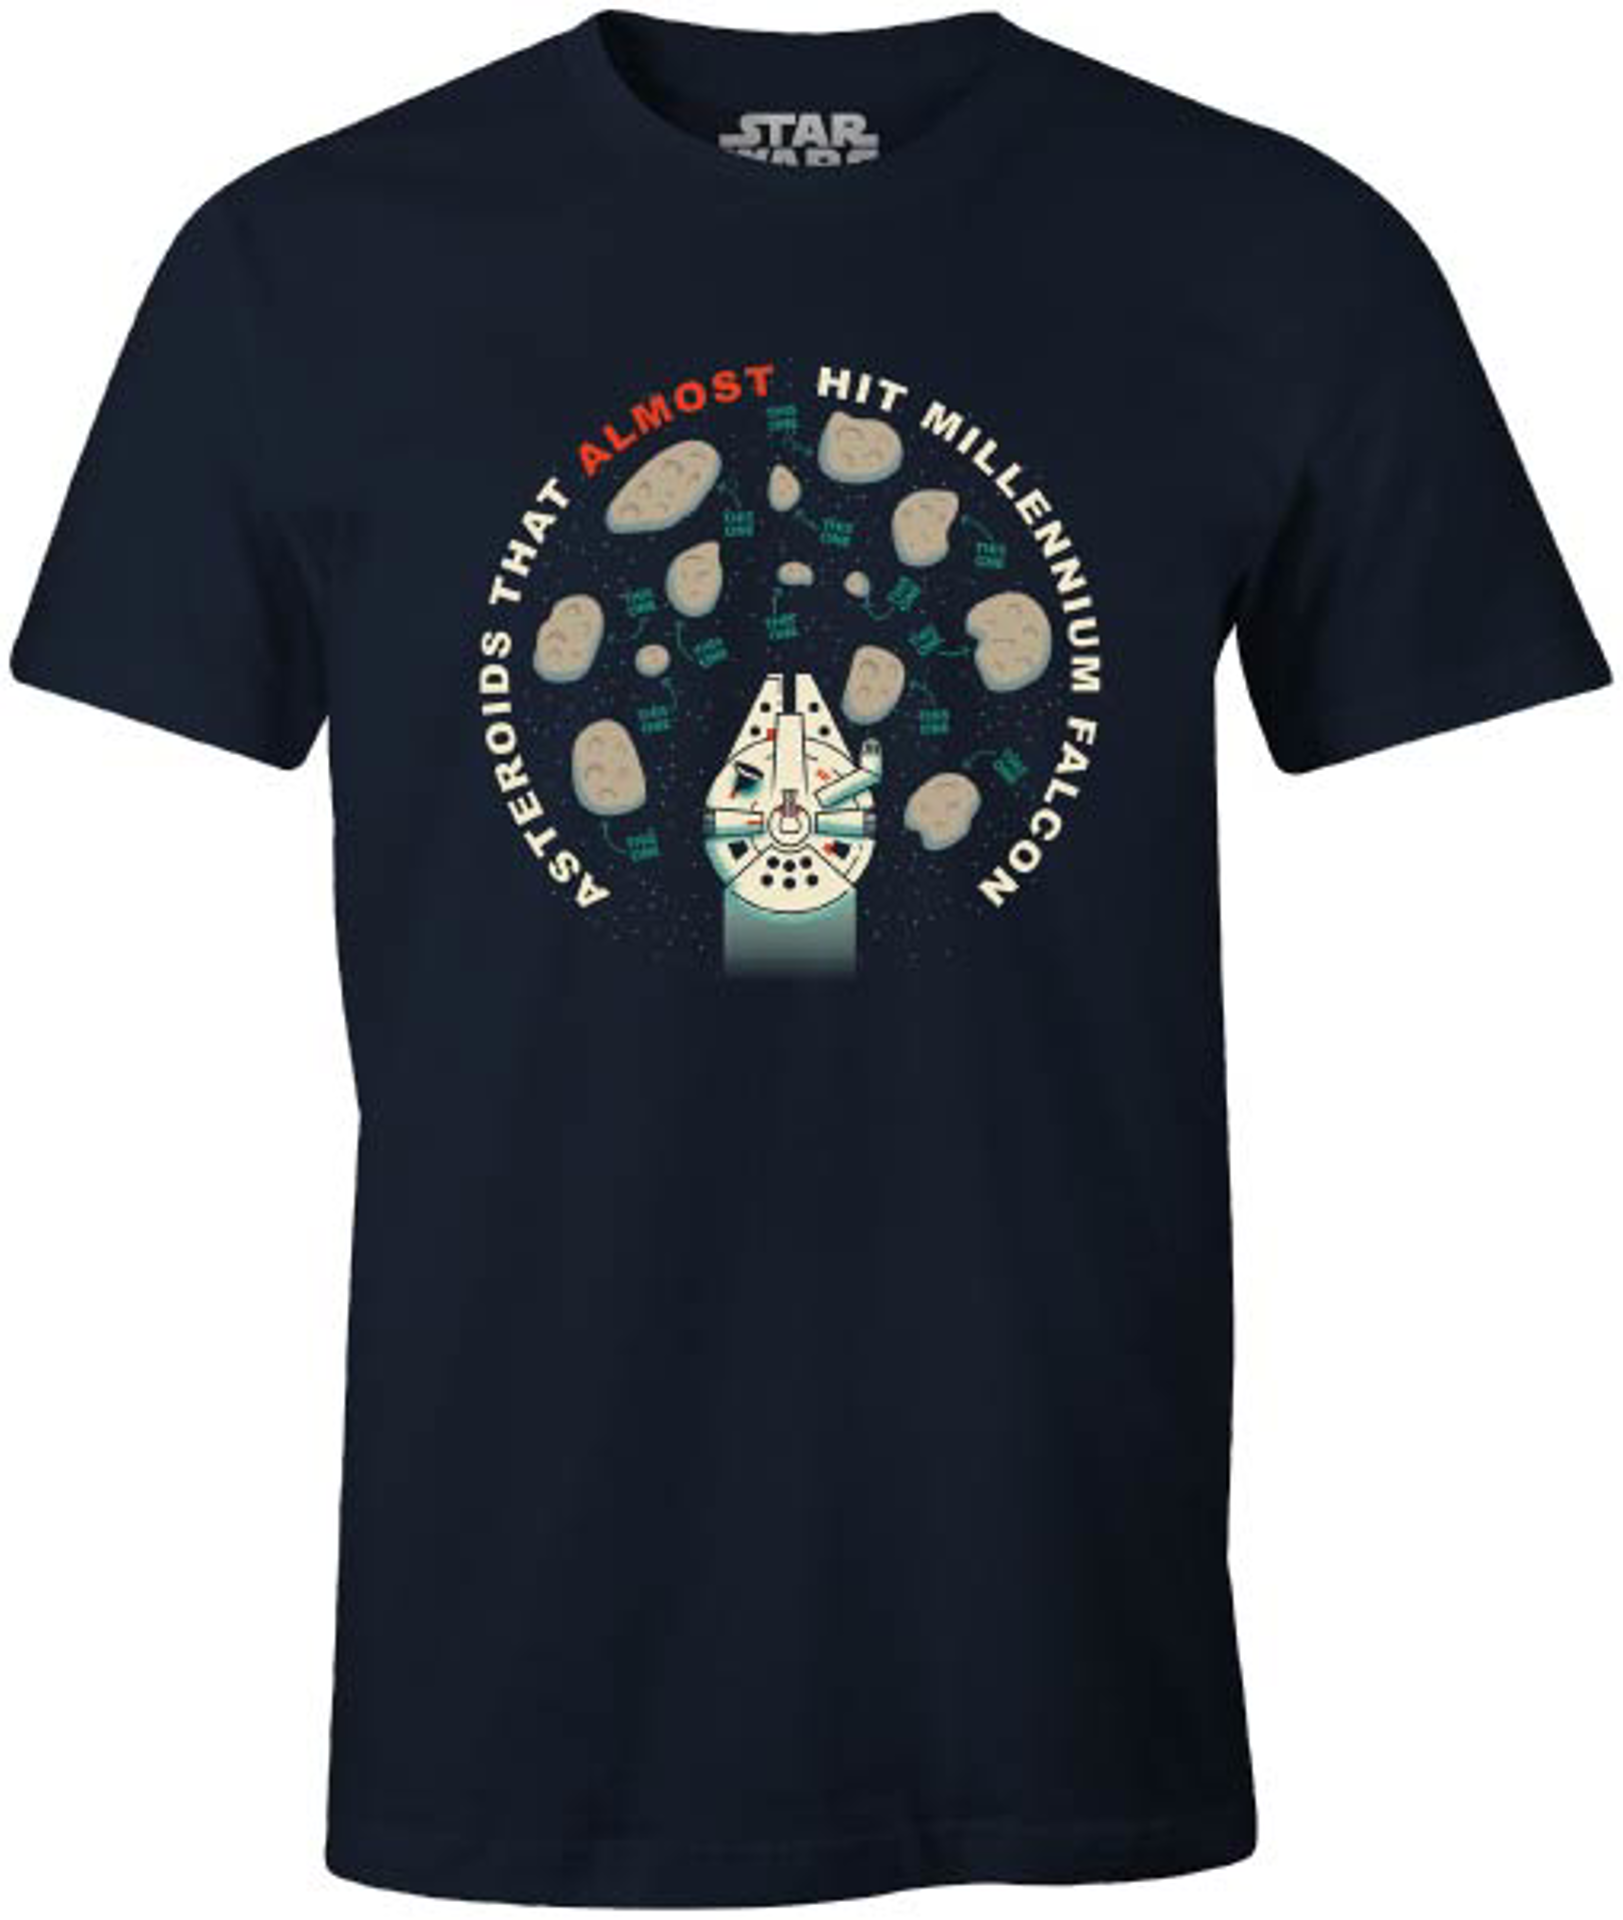 Star Wars  - T-shirt Bleu Marine Hommes - Asteroids that almost hit millenium falcon - XL